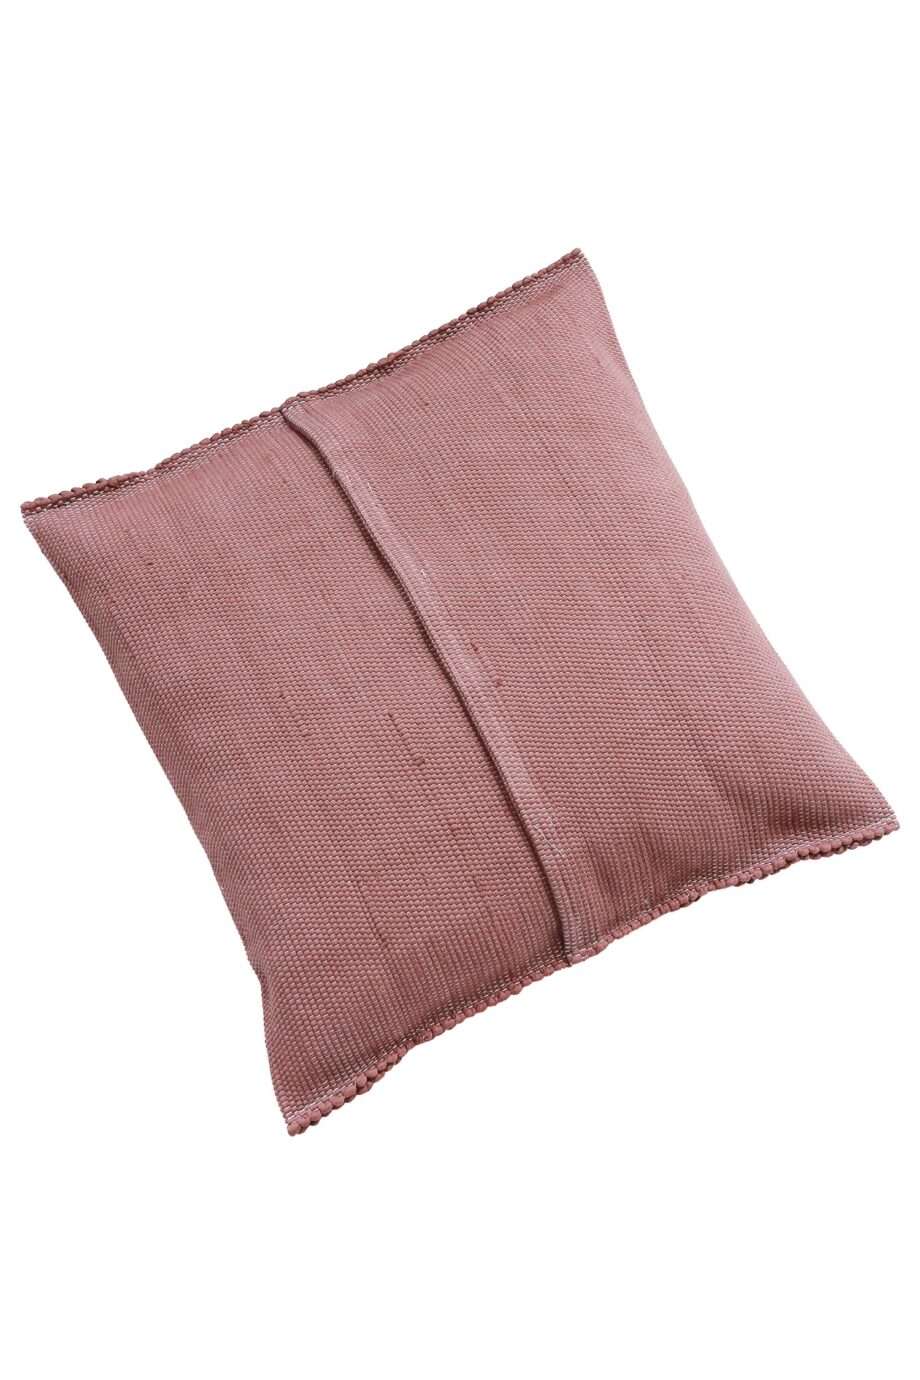 quadro marsala rose woven cotton pillowcase medium_back